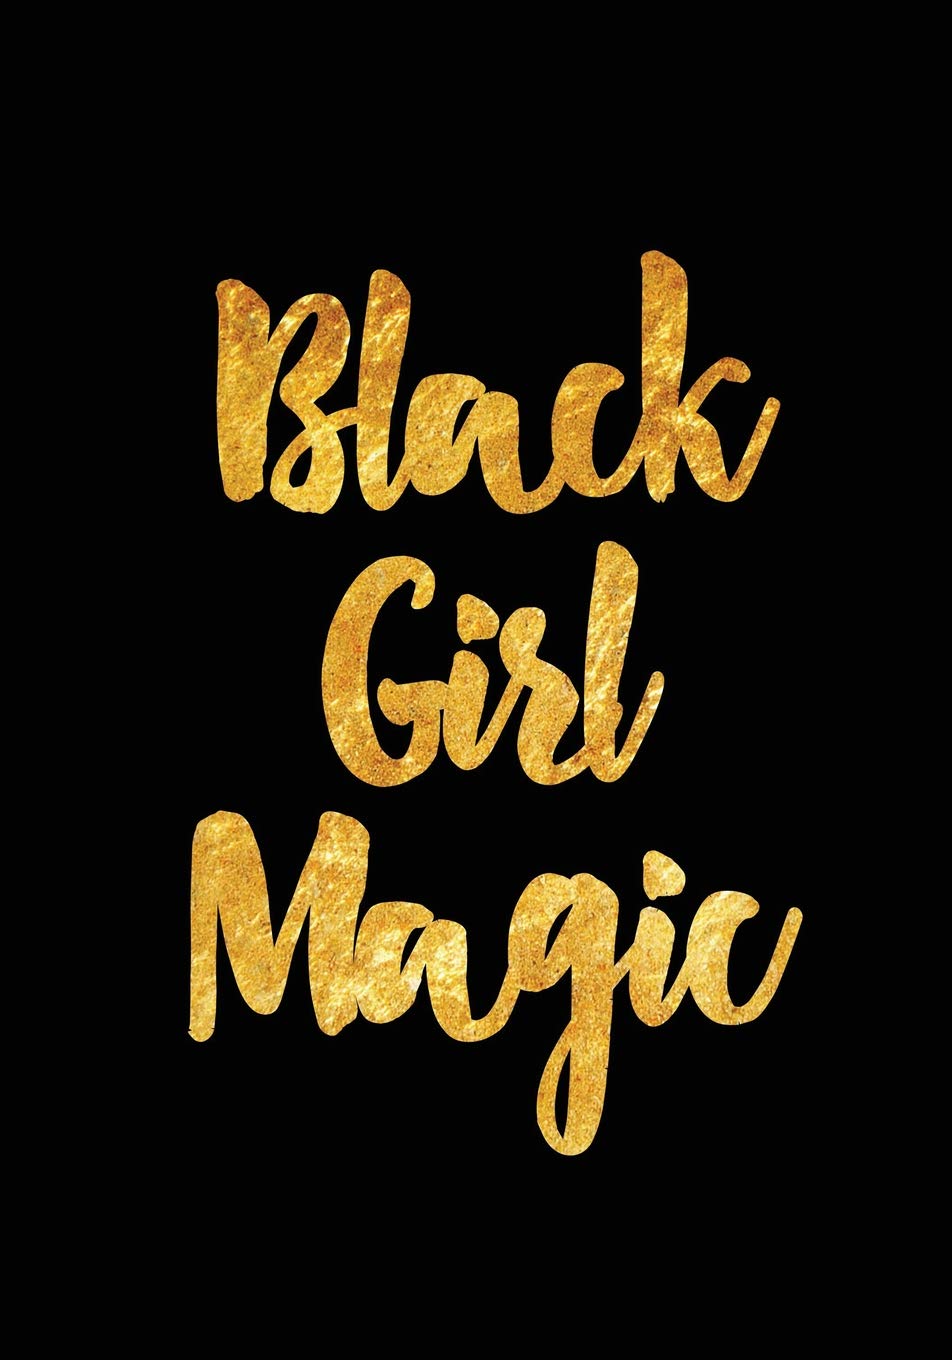 Black Girl Magic: Gold Textured Notebook Journal Diary, African